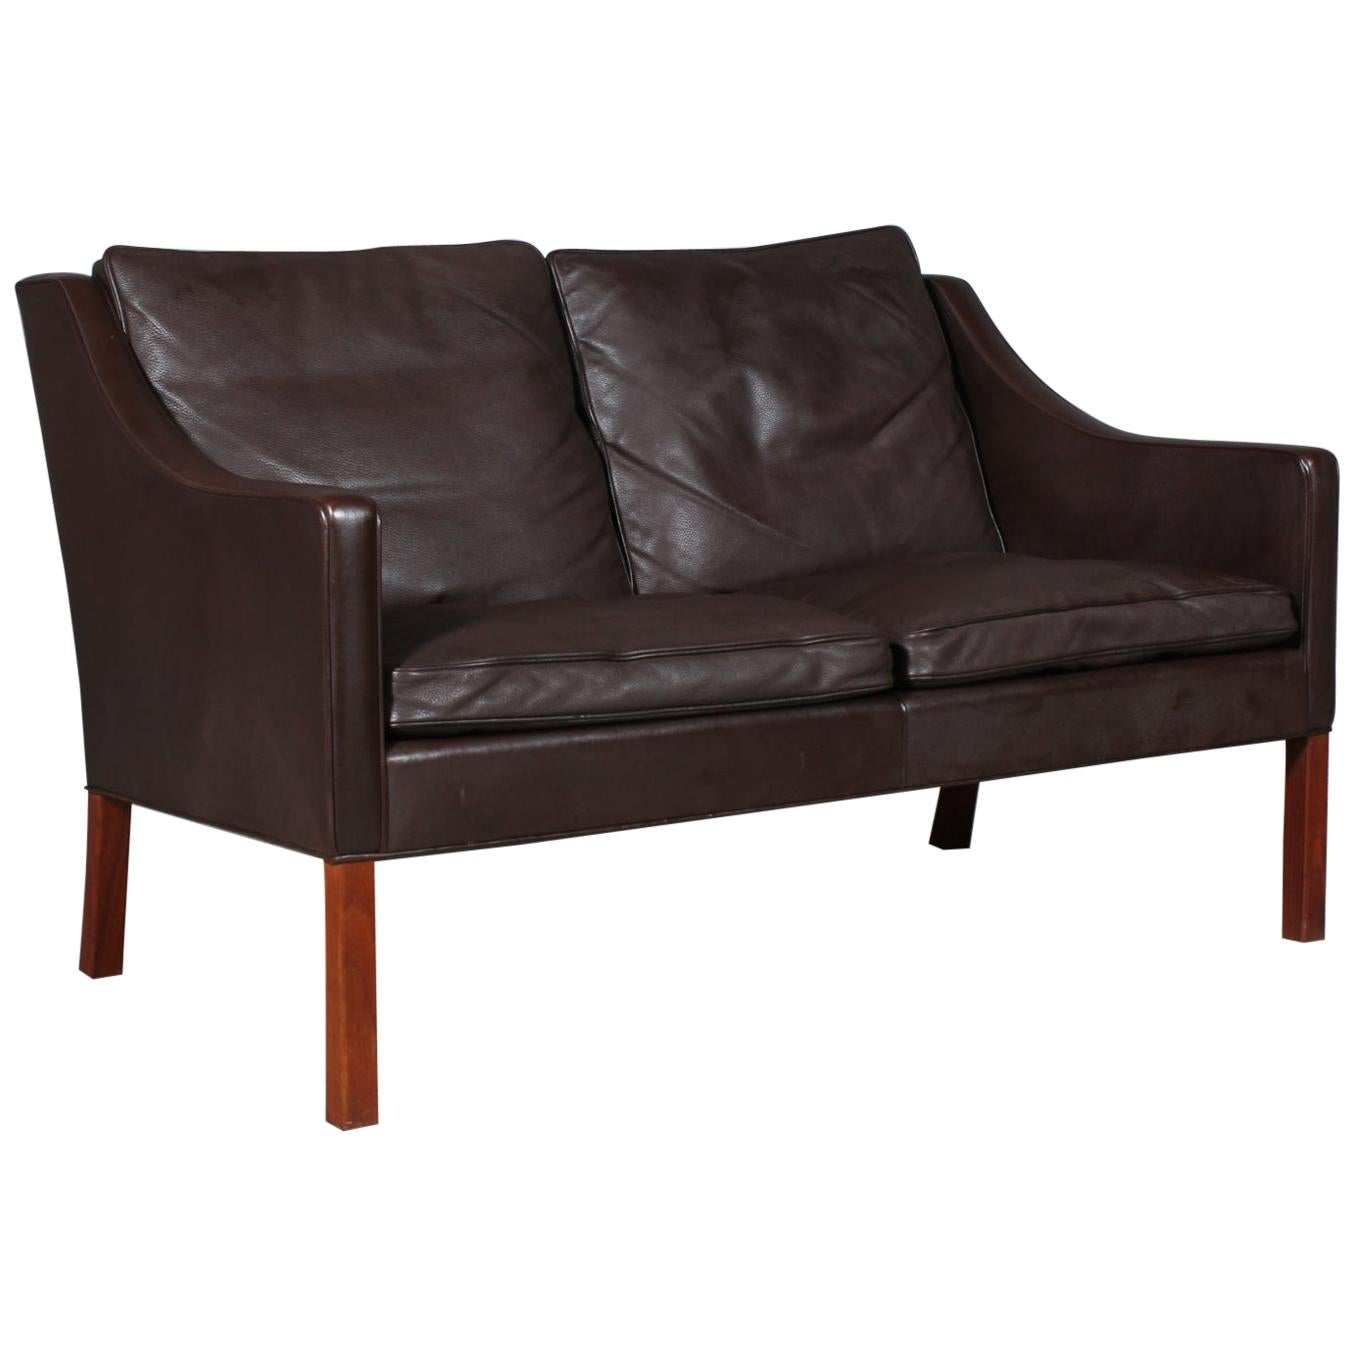 Børge Mogensen Two-Seat Sofa, Model 2208, Original brown Leather